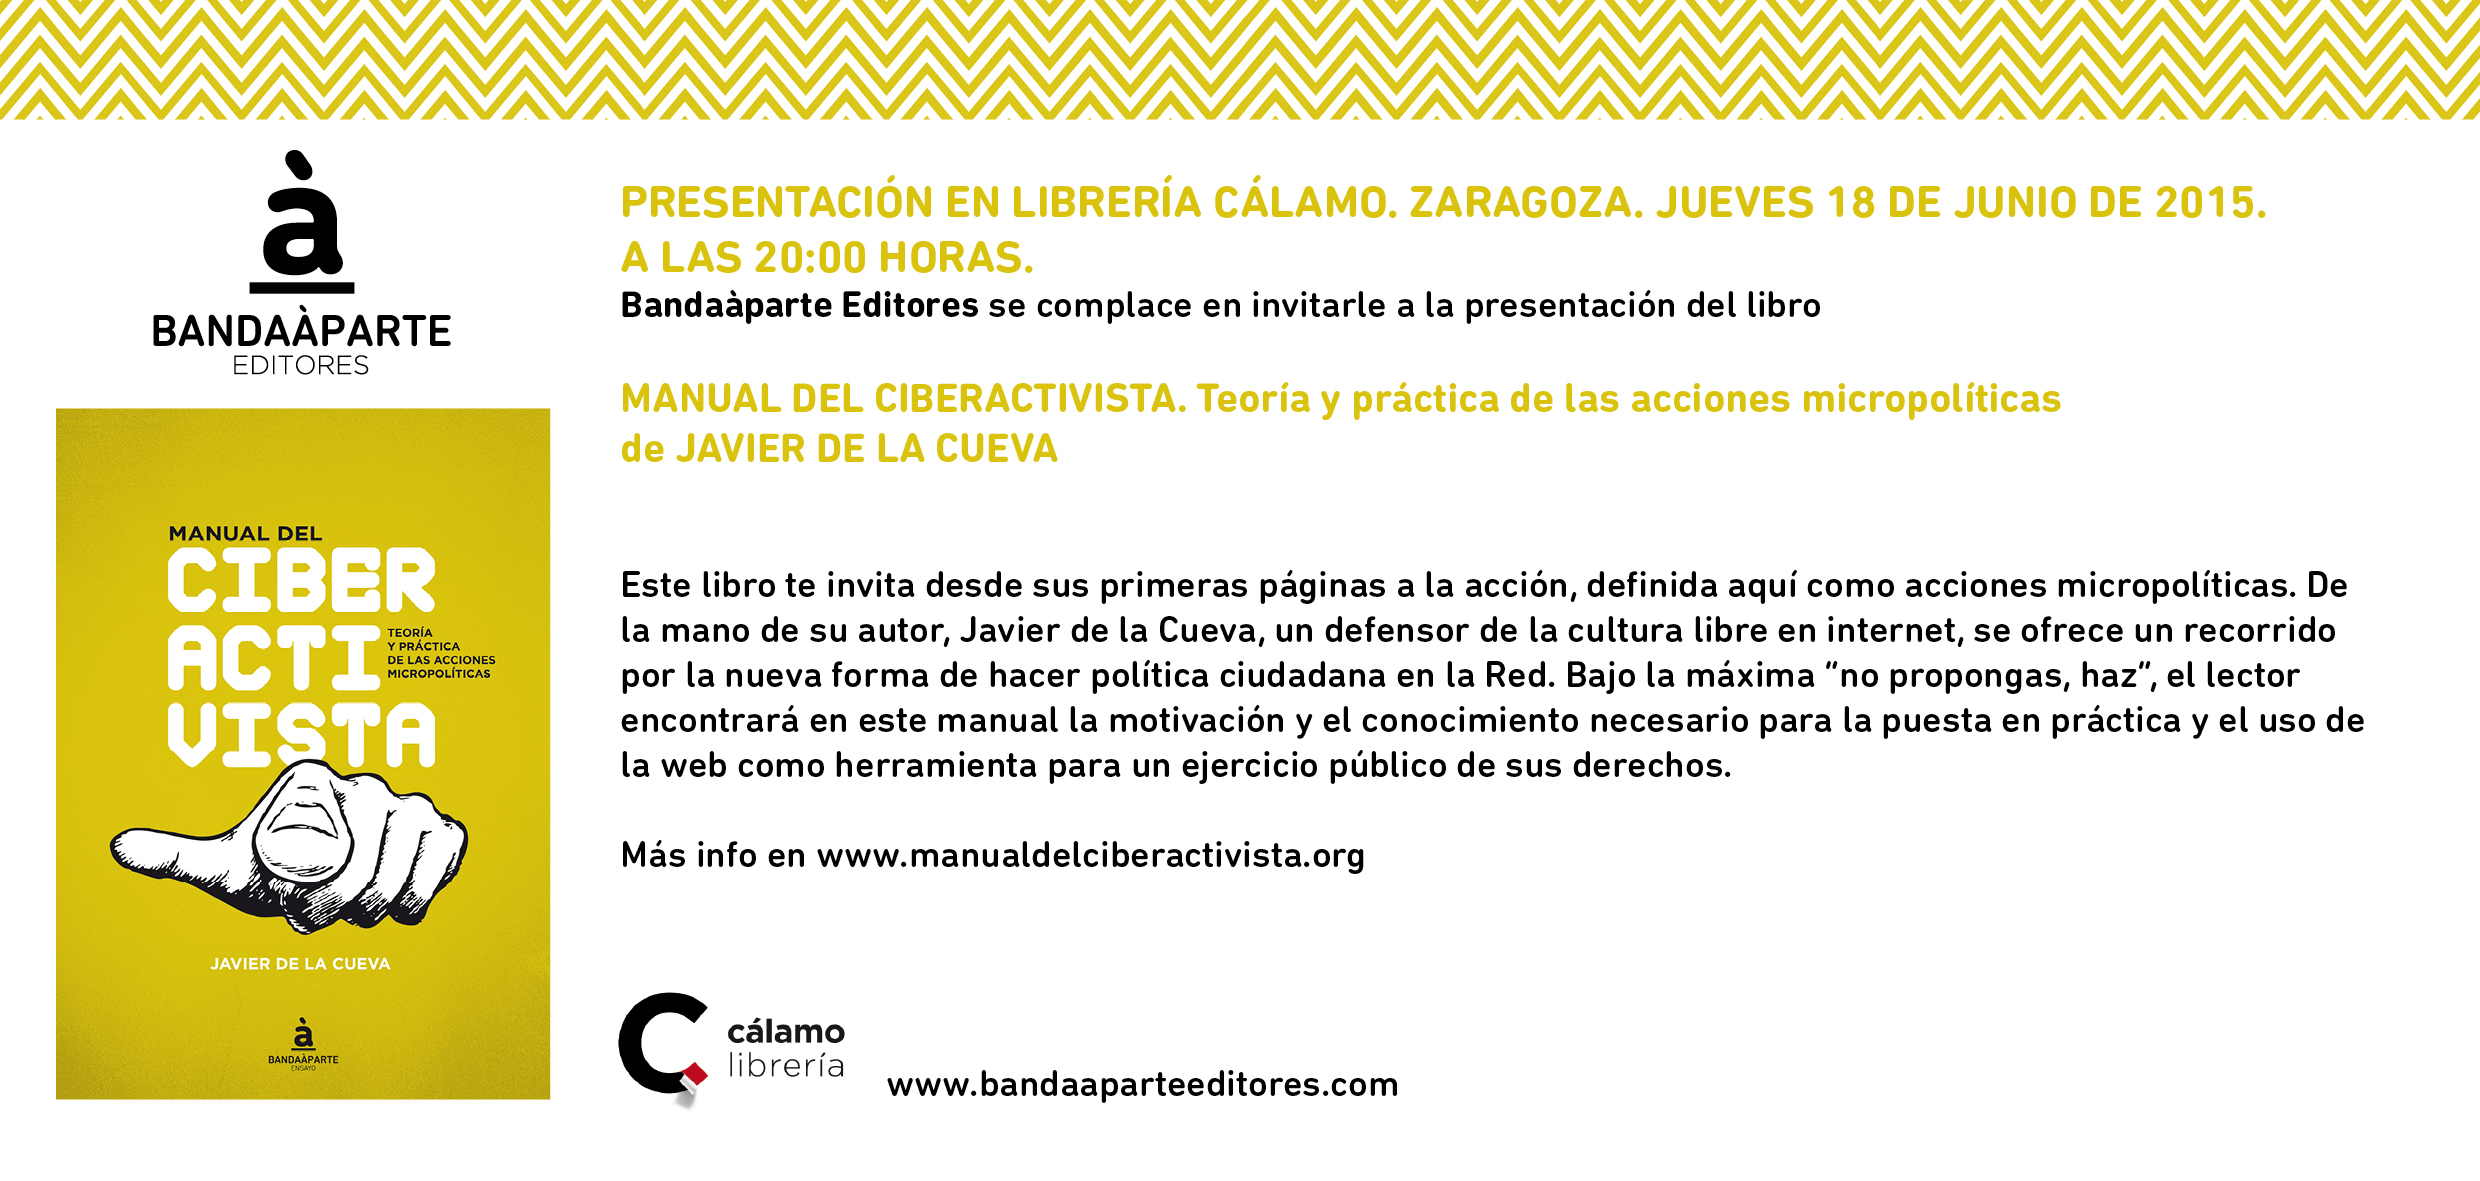 /img/2015-06-18_invitacion_zaragoza_libreria-calamo.jpg